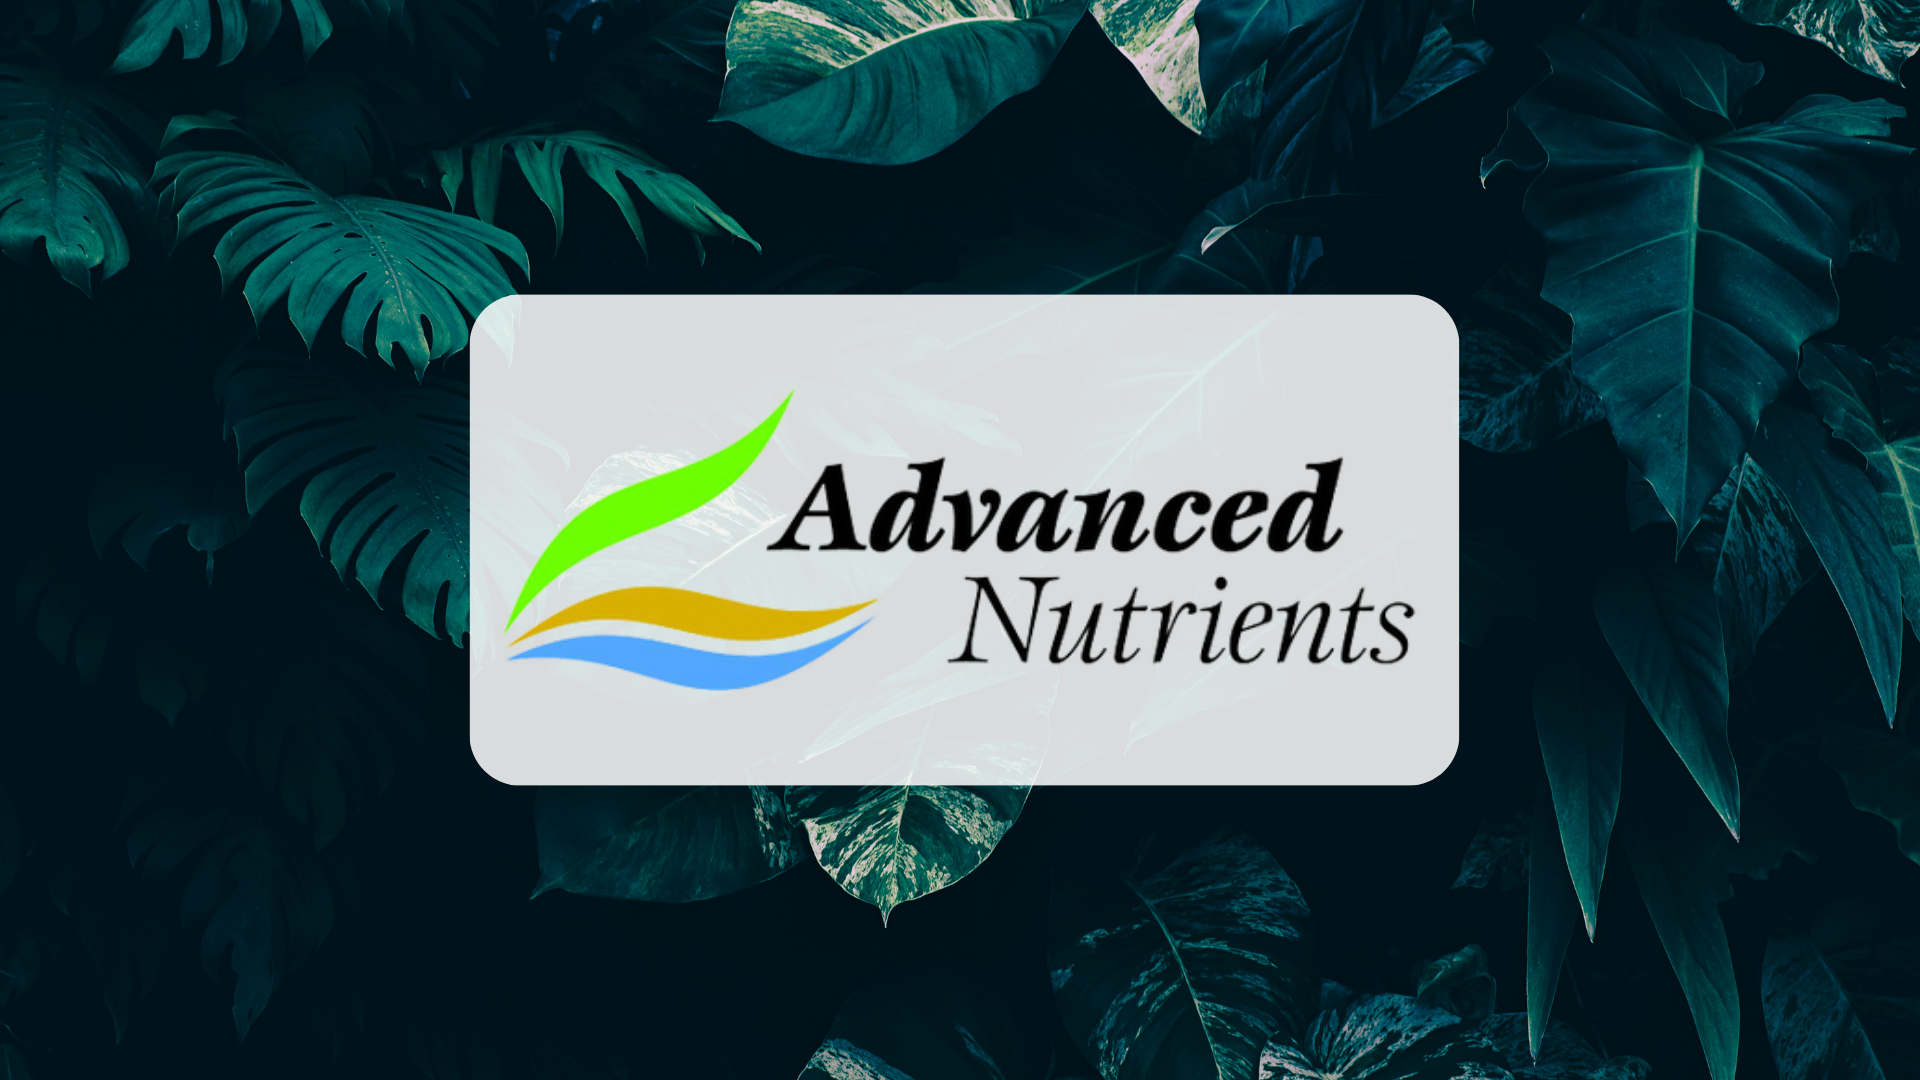 Advanced Nutrients Range: Complete Guide